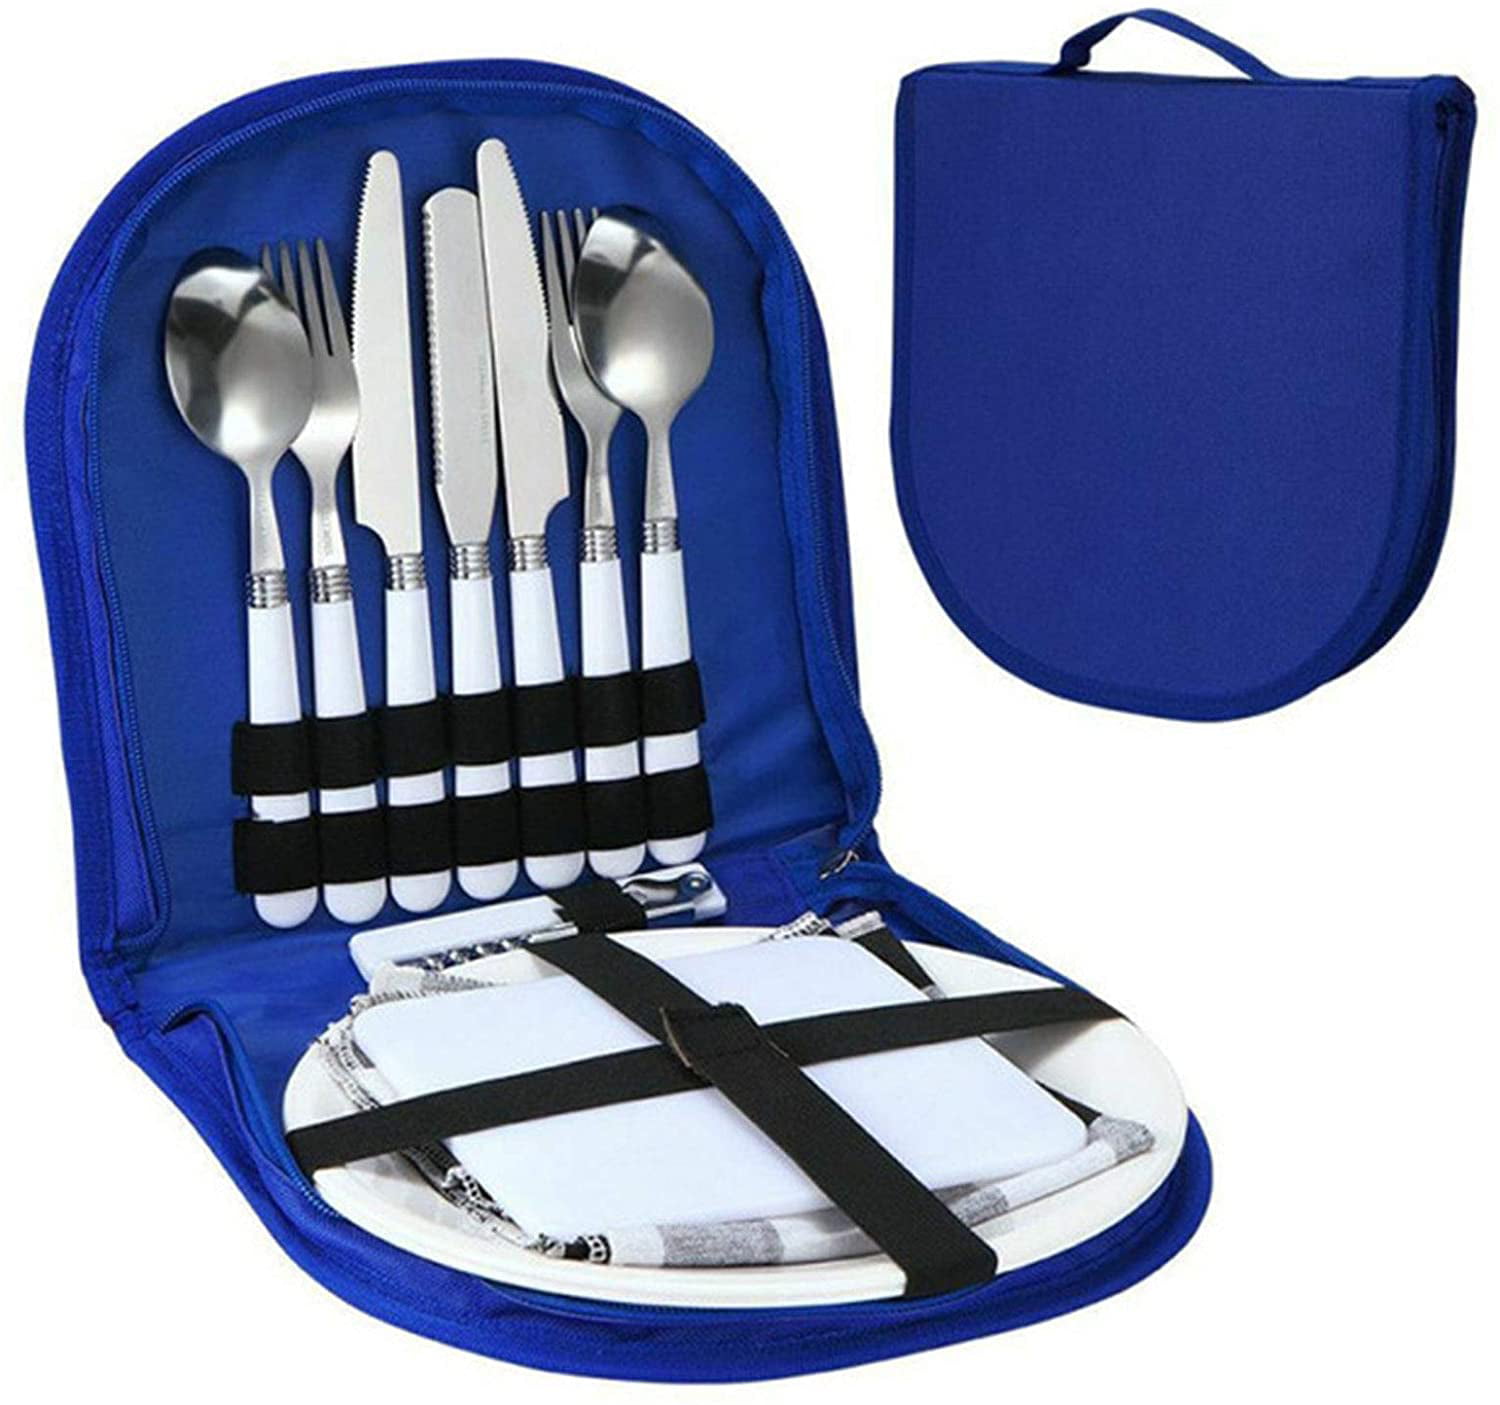 Ezyoutdoor 13 Piece Stainless Steel Travel Hiking Kitchen Camping Cutlery Set With Lightweight Storage Bag Folk, Spoon, Chopsticks,Knife 